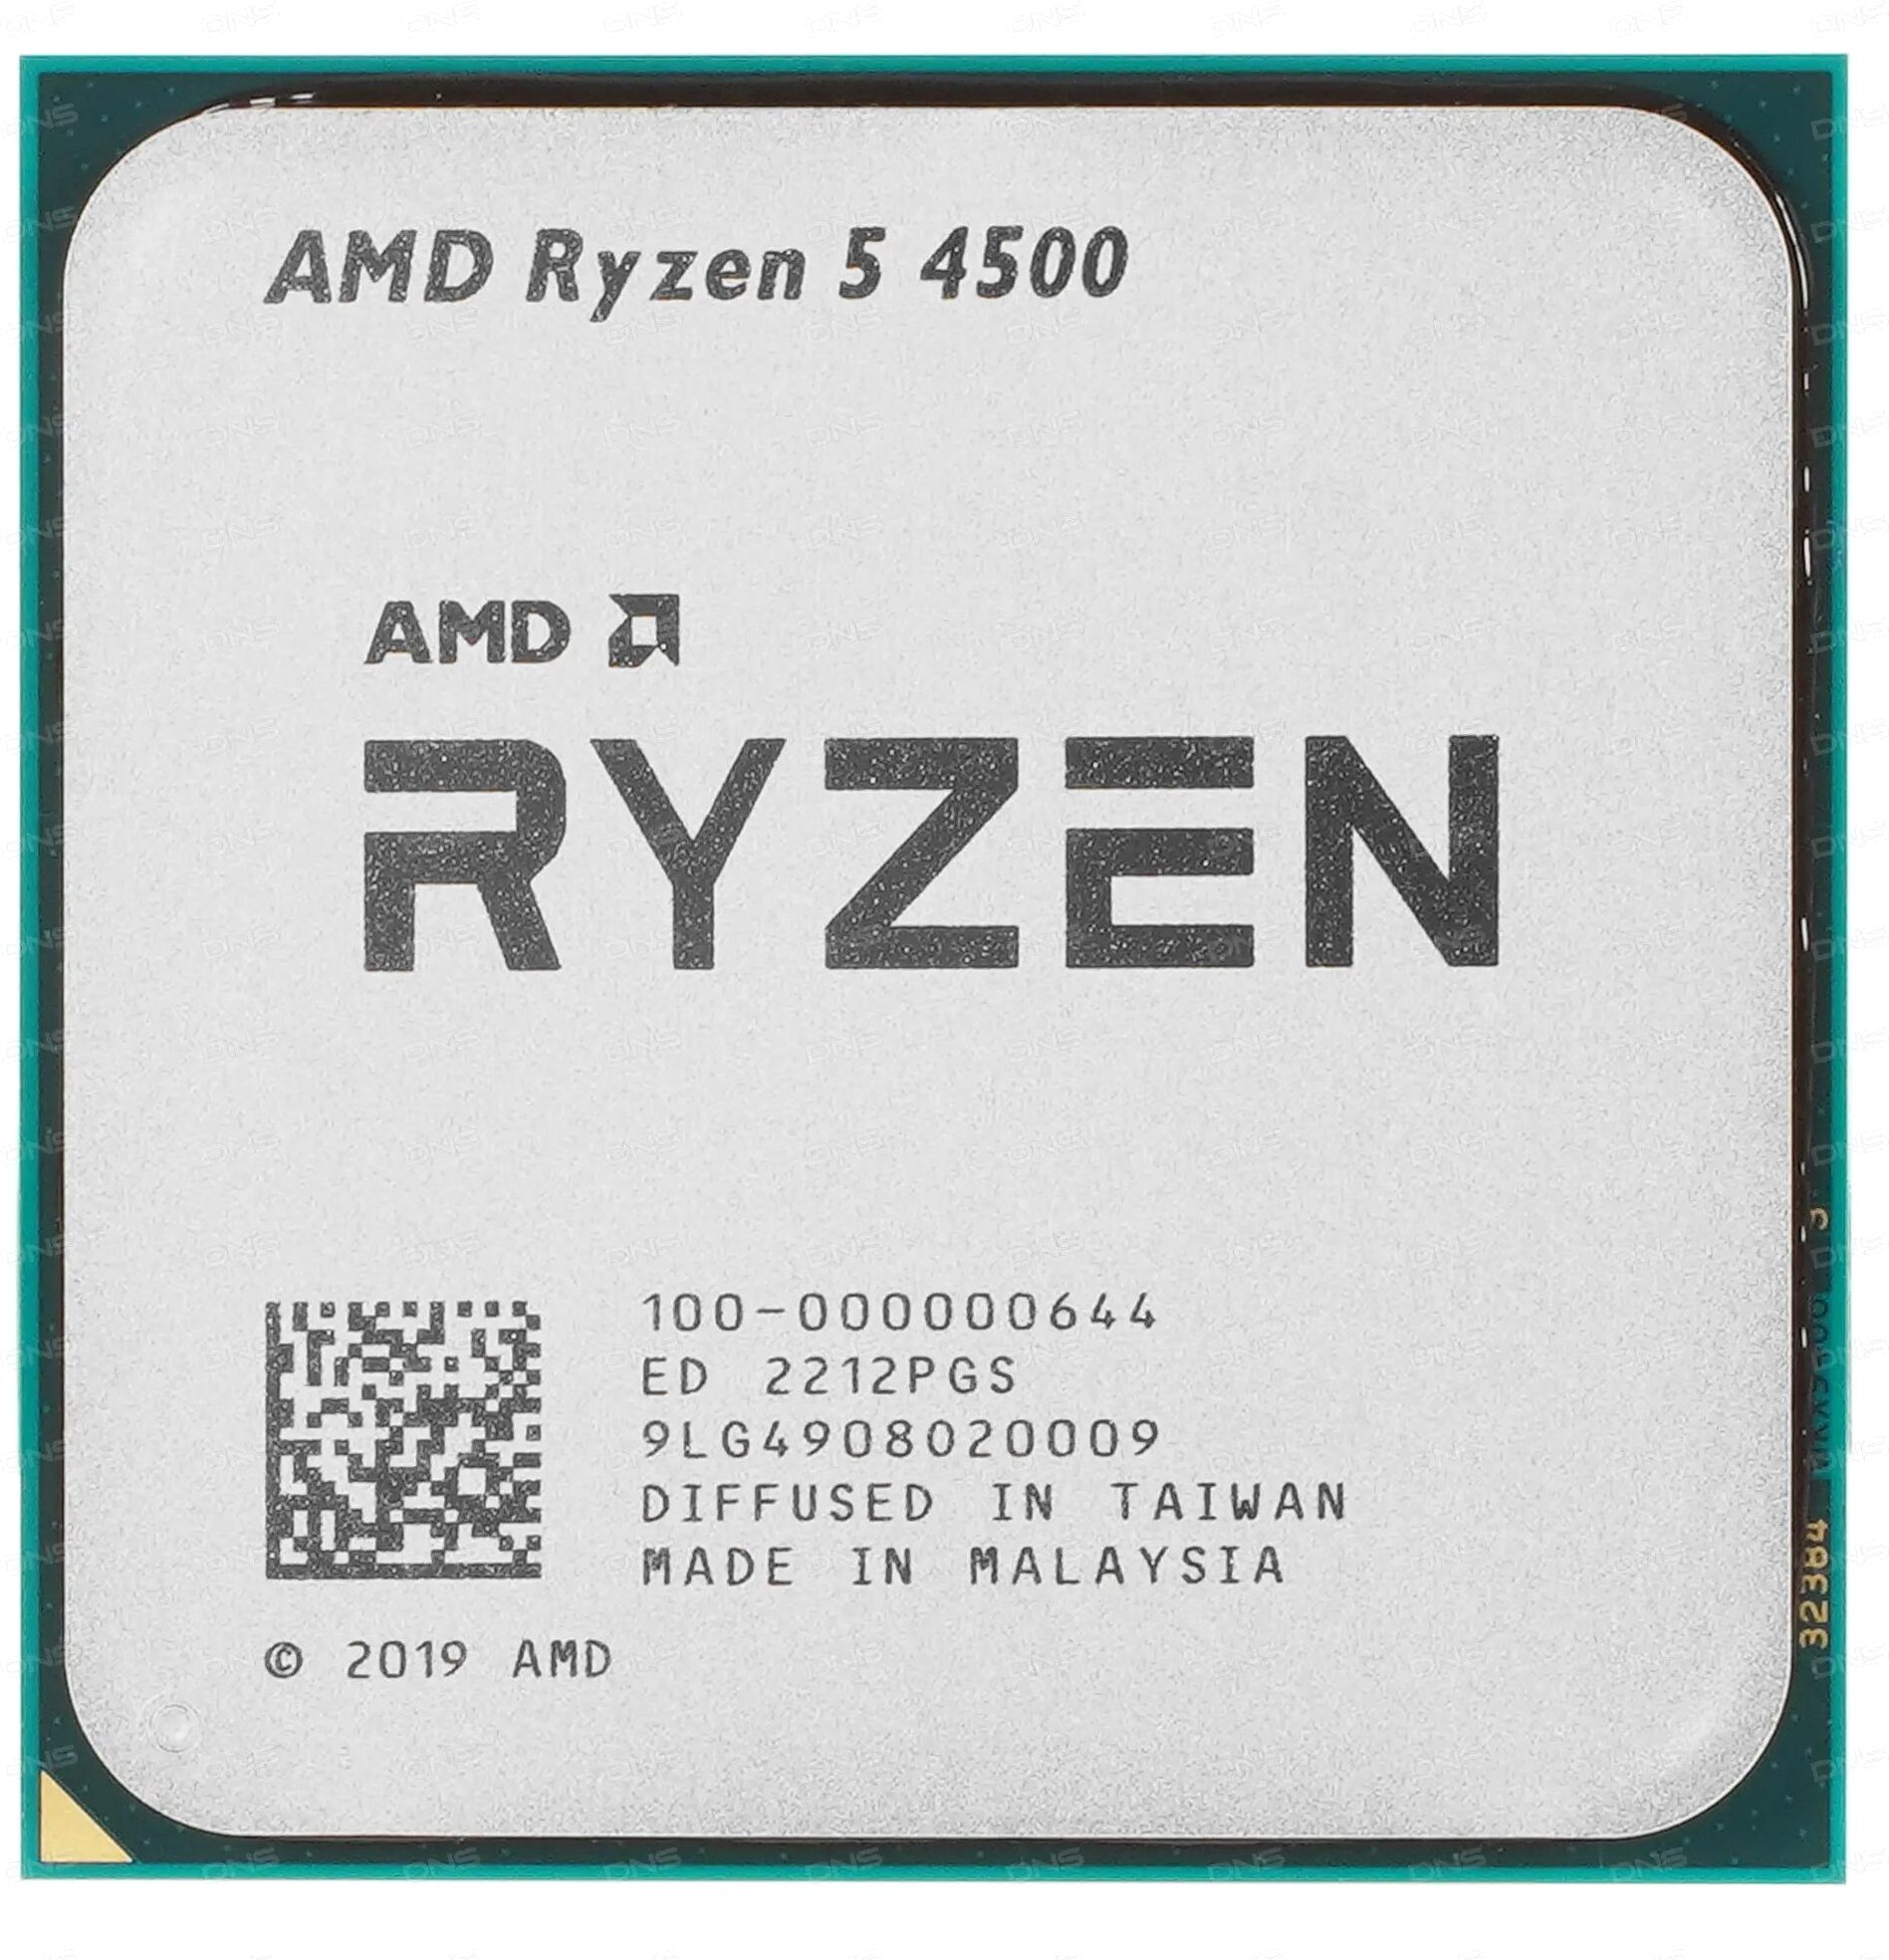  AMD Ryzen 5 4500 X6 SAM4 65W 3600 (100-000000644) (EAC)